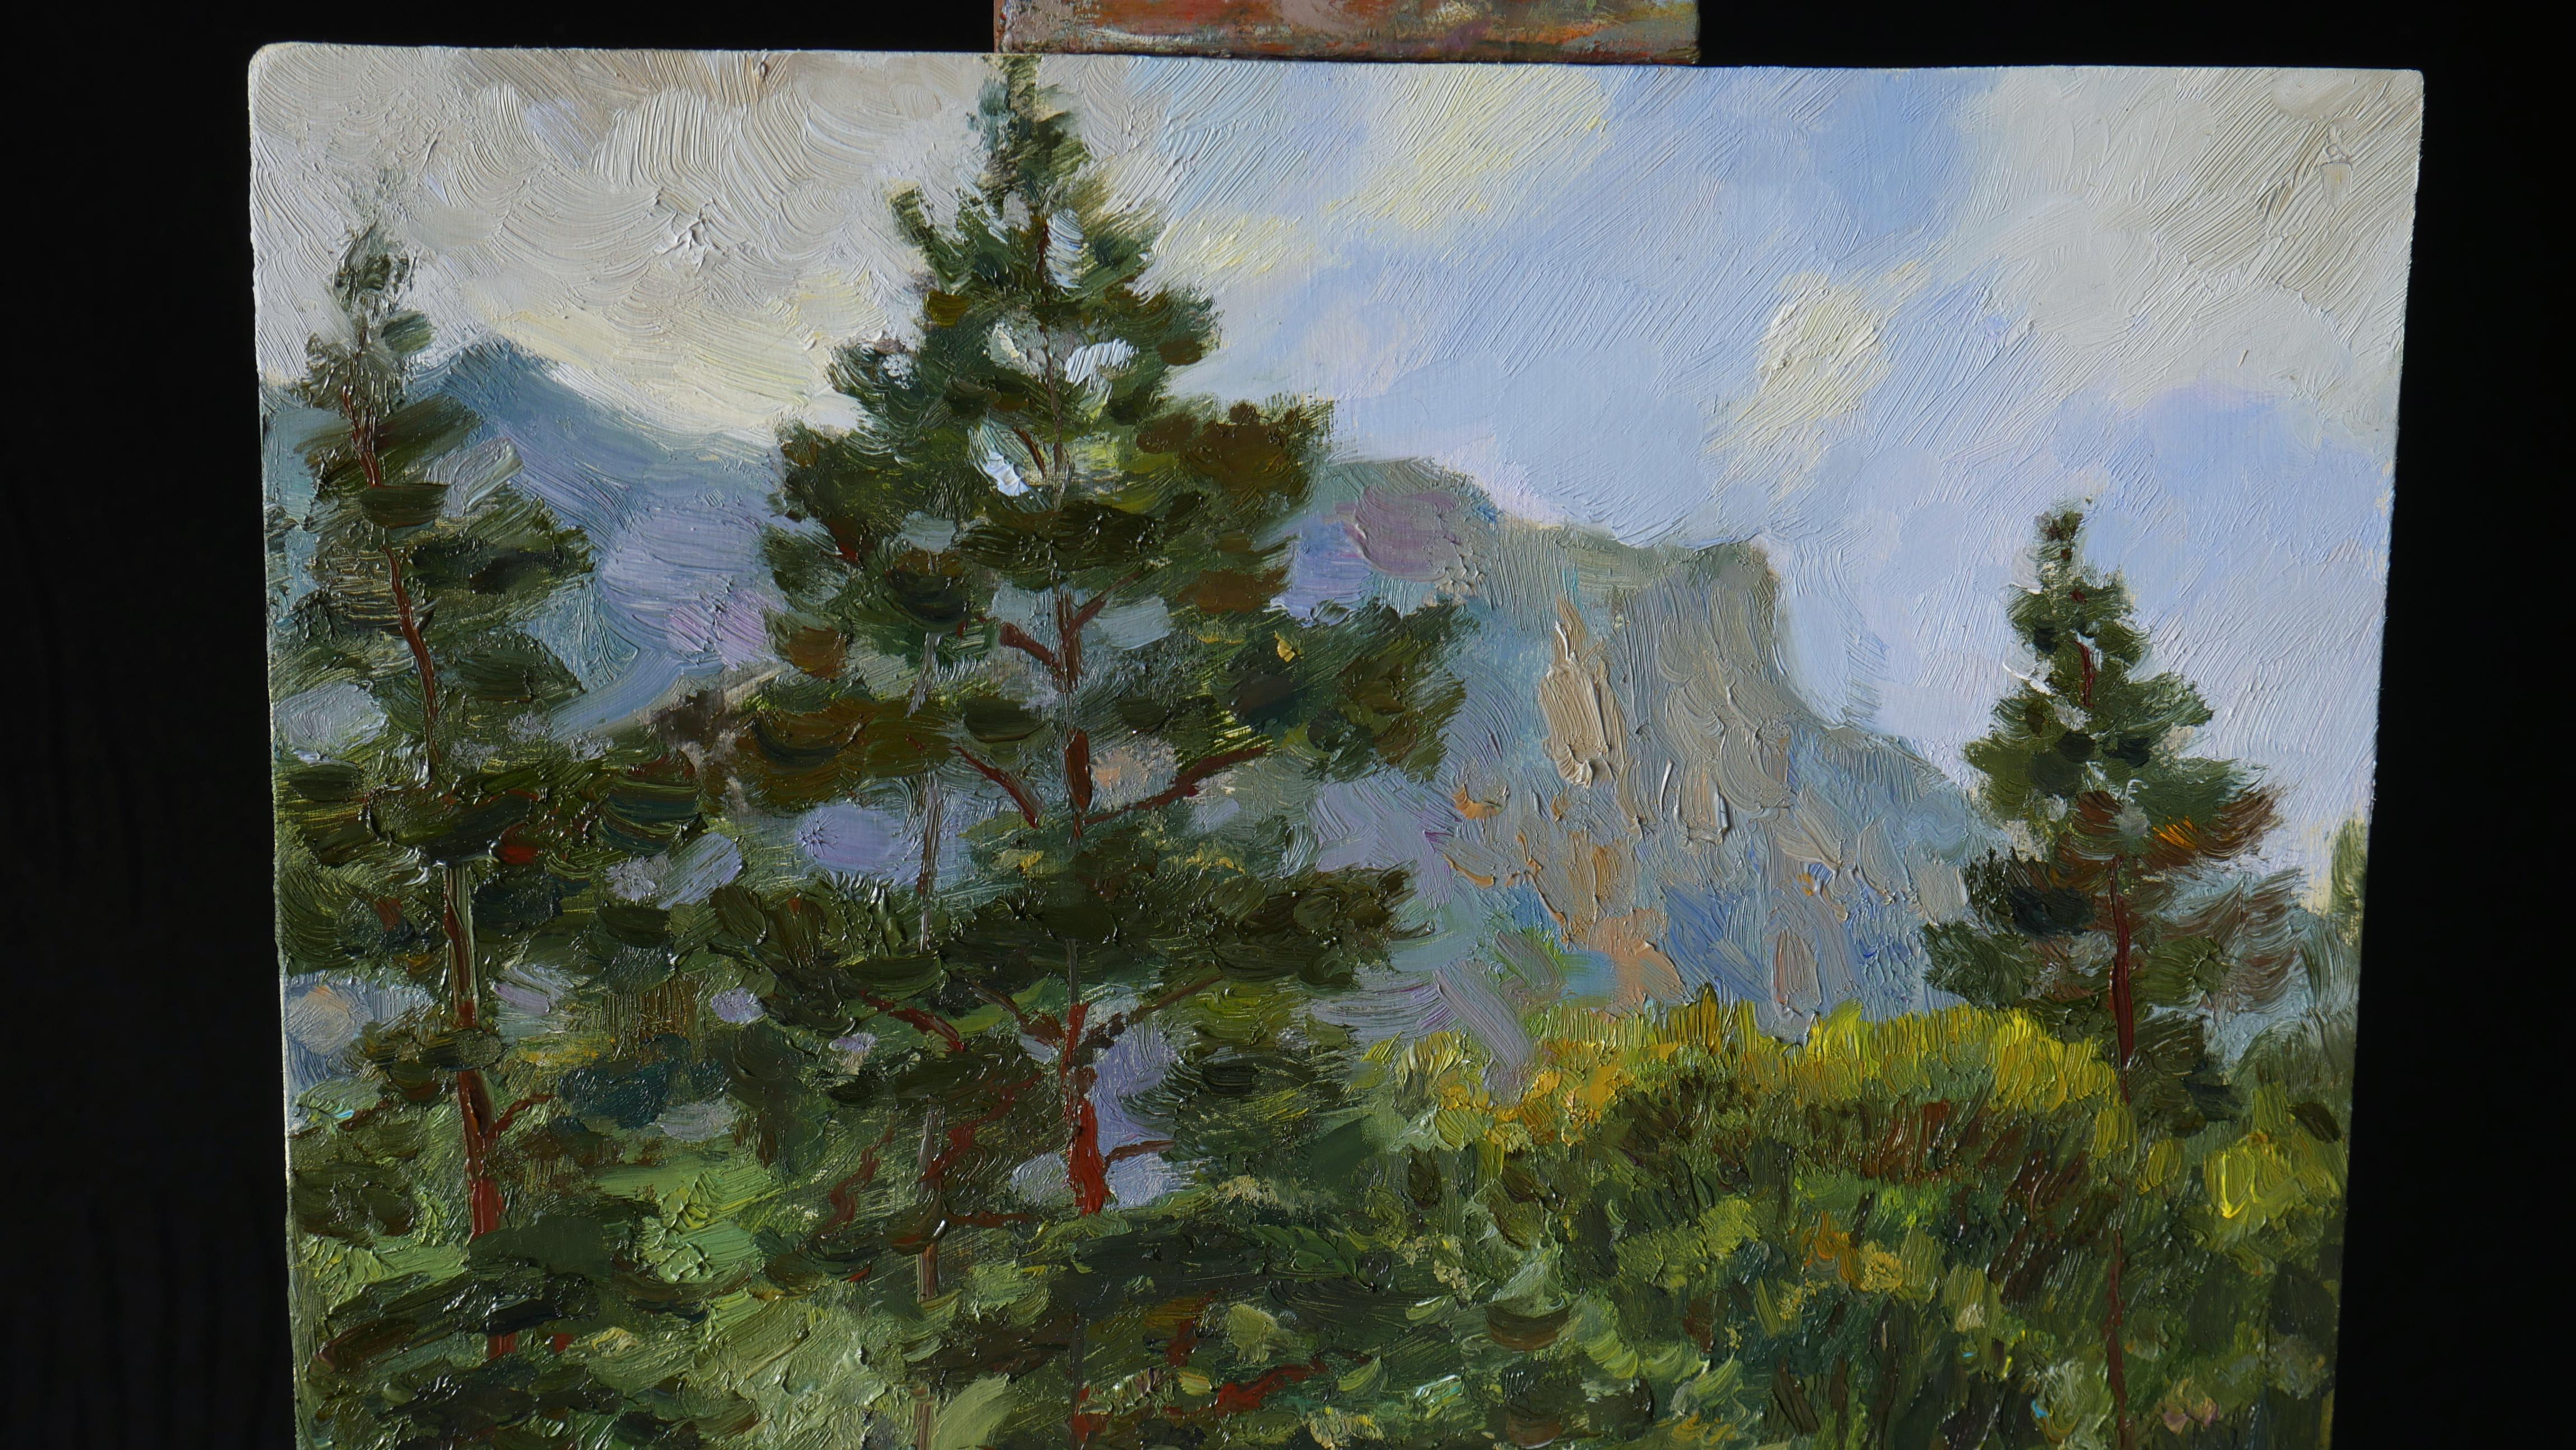 The evening in the mountains - Berge malen (Realismus), Painting, von Nikolay Dmitriev